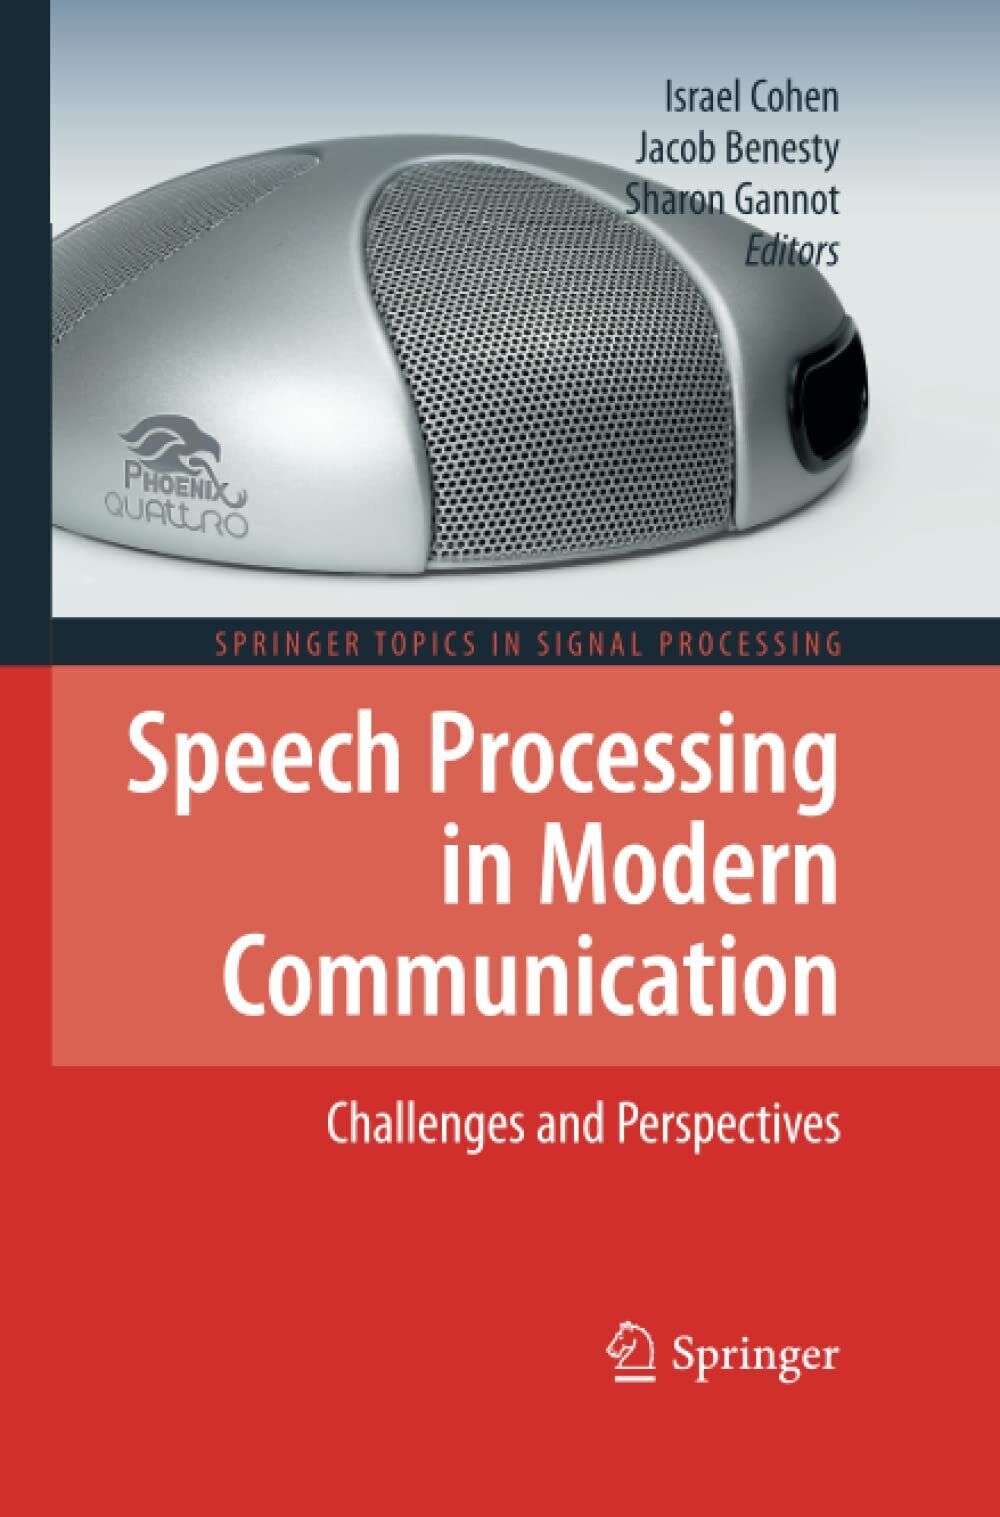 Speech Processing in Modern Communication - Israel Cohen - Springer, 2012